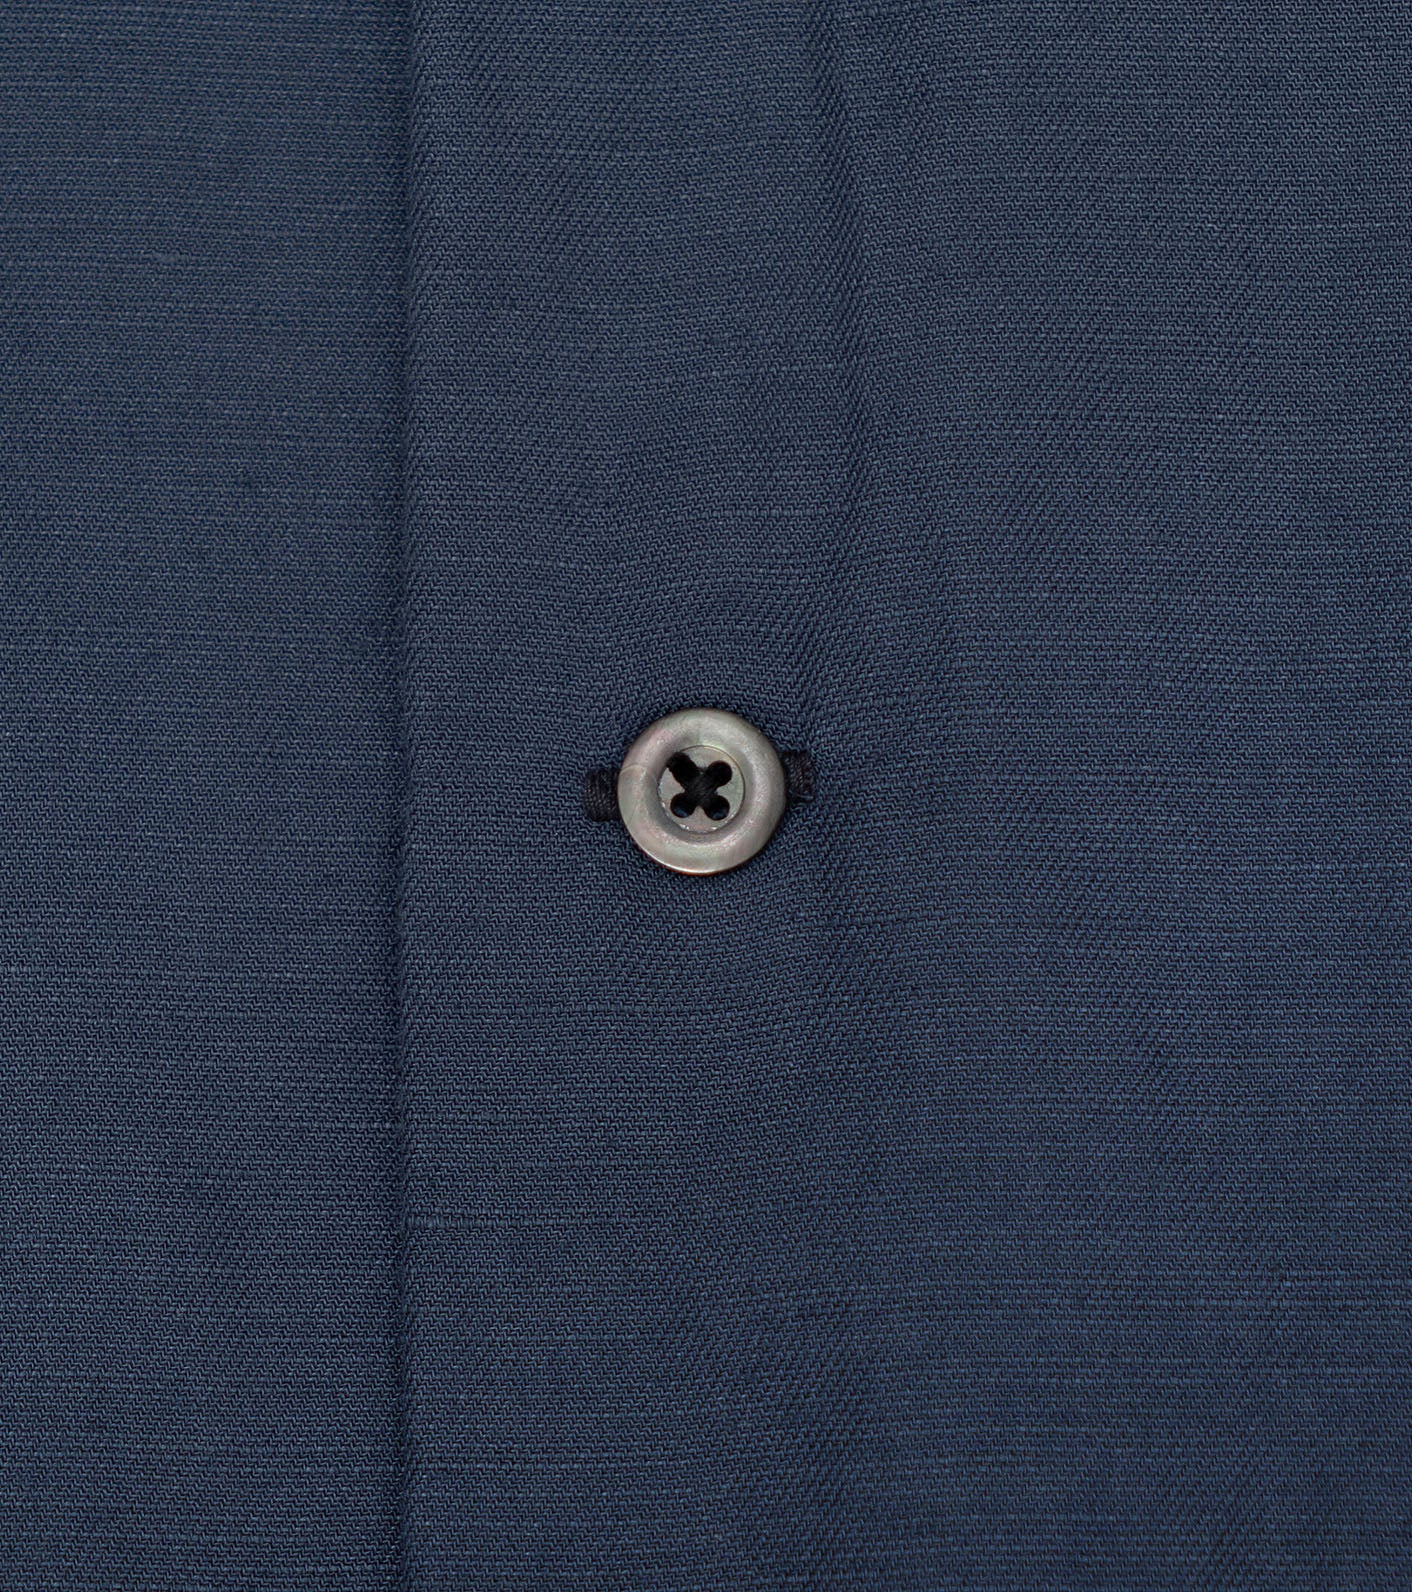 Nanamica - Shirt - Open Collar Cupra Hemp - SS Shirt - Sax